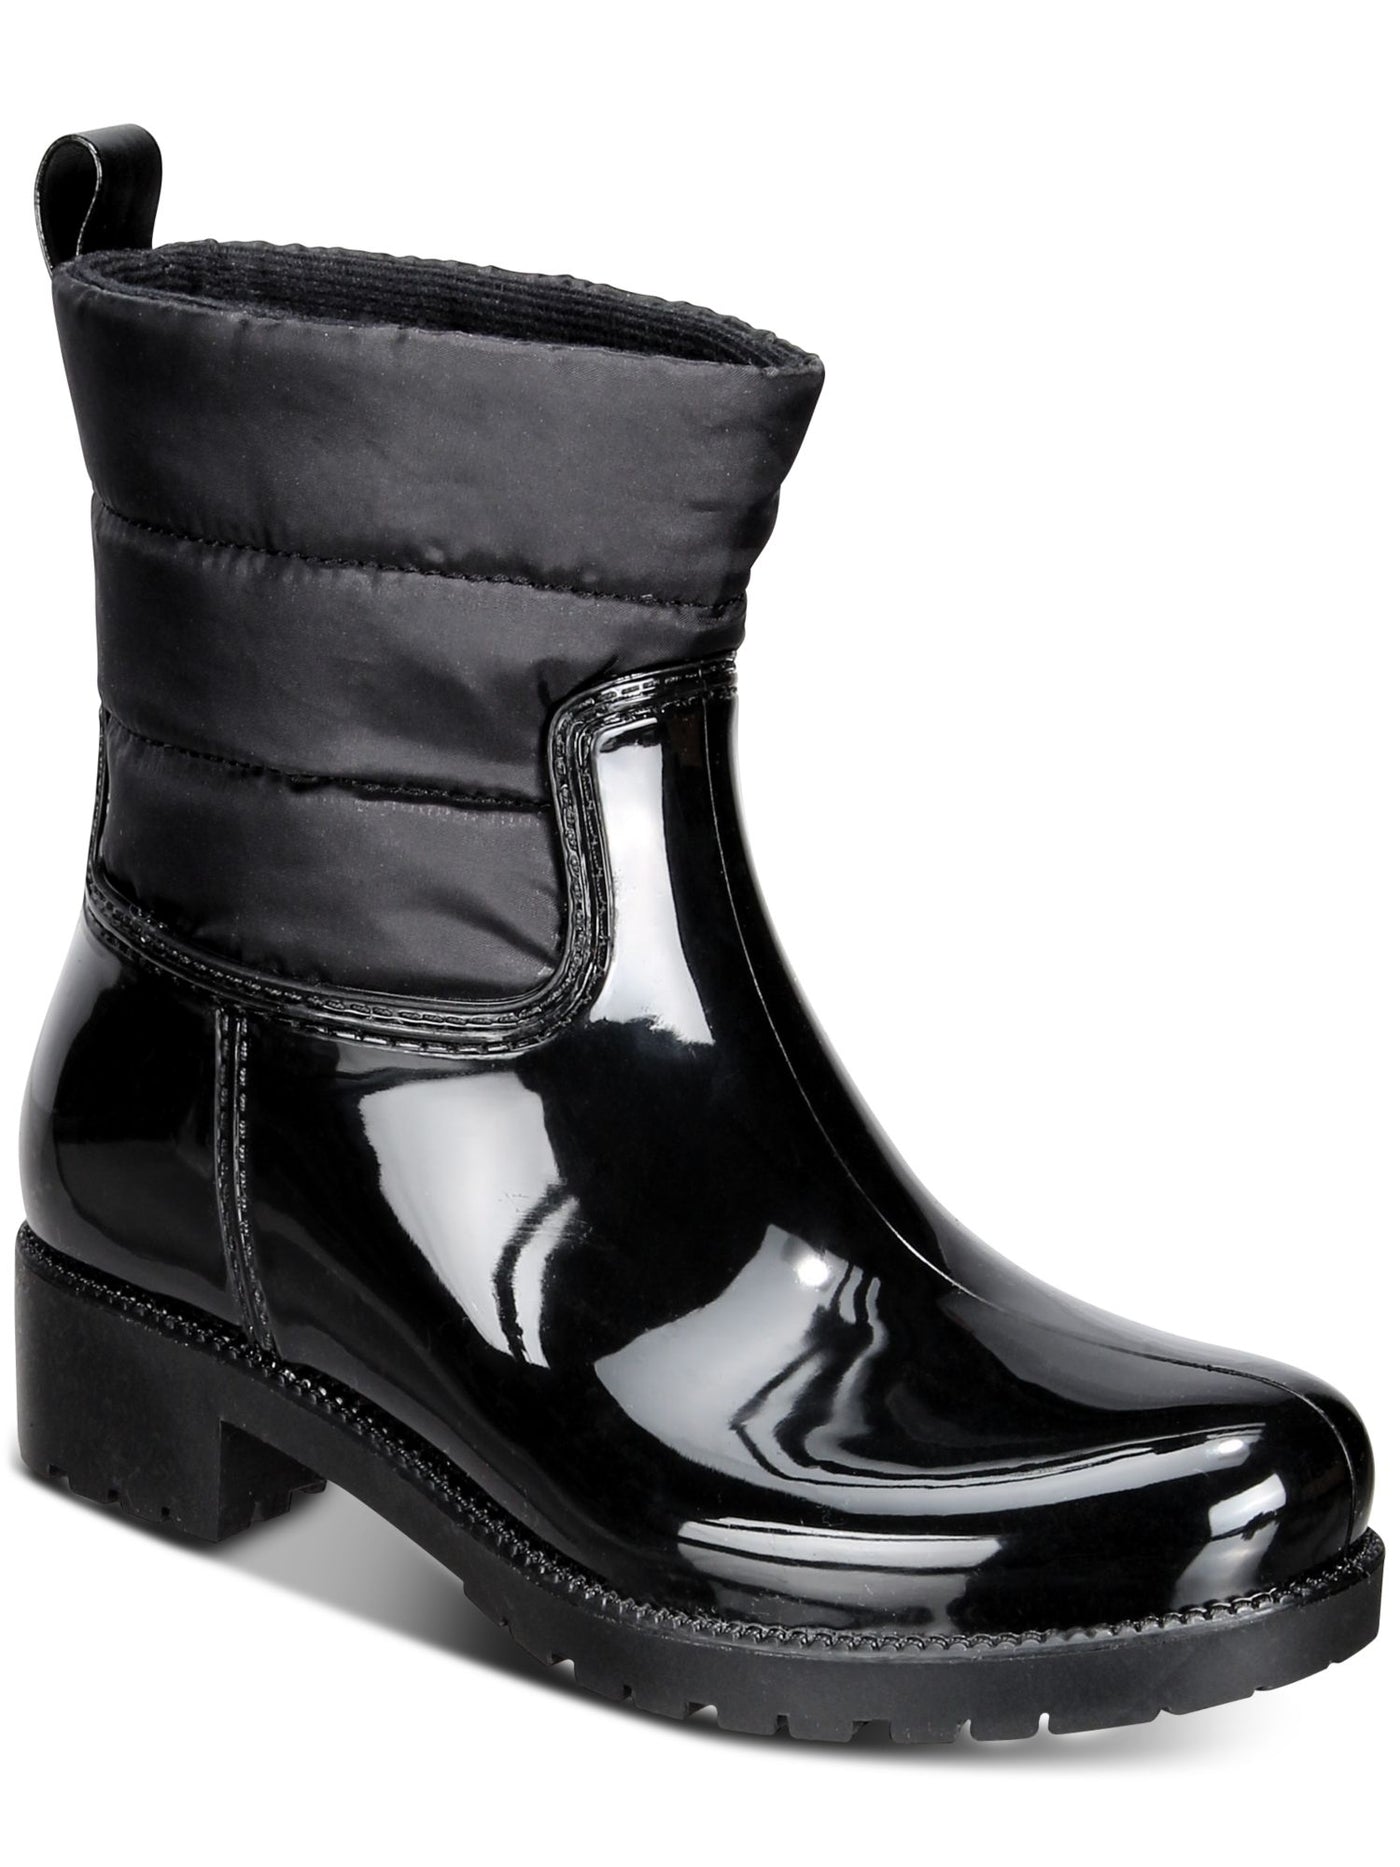 CHARTER CLUB Womens Black Water Resistant Trudyy Round Toe Block Heel Rain Boots 6 M